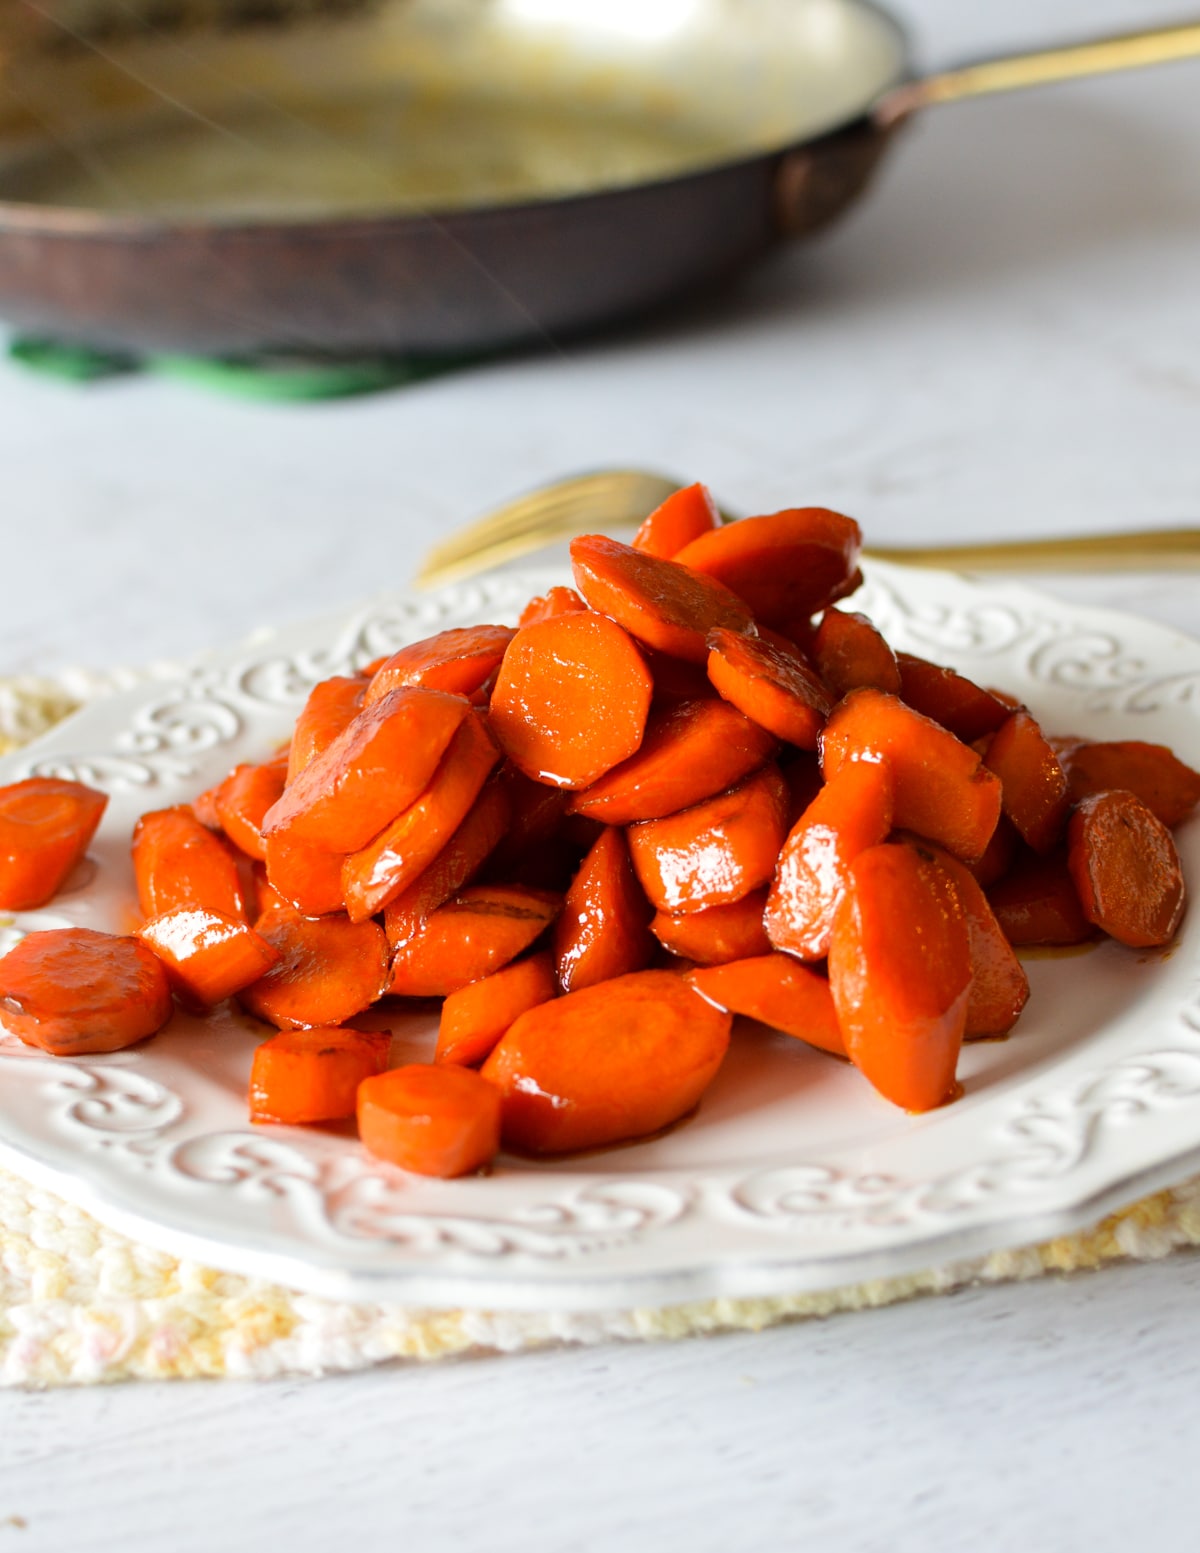 glazed stovetop carrots on a plate.